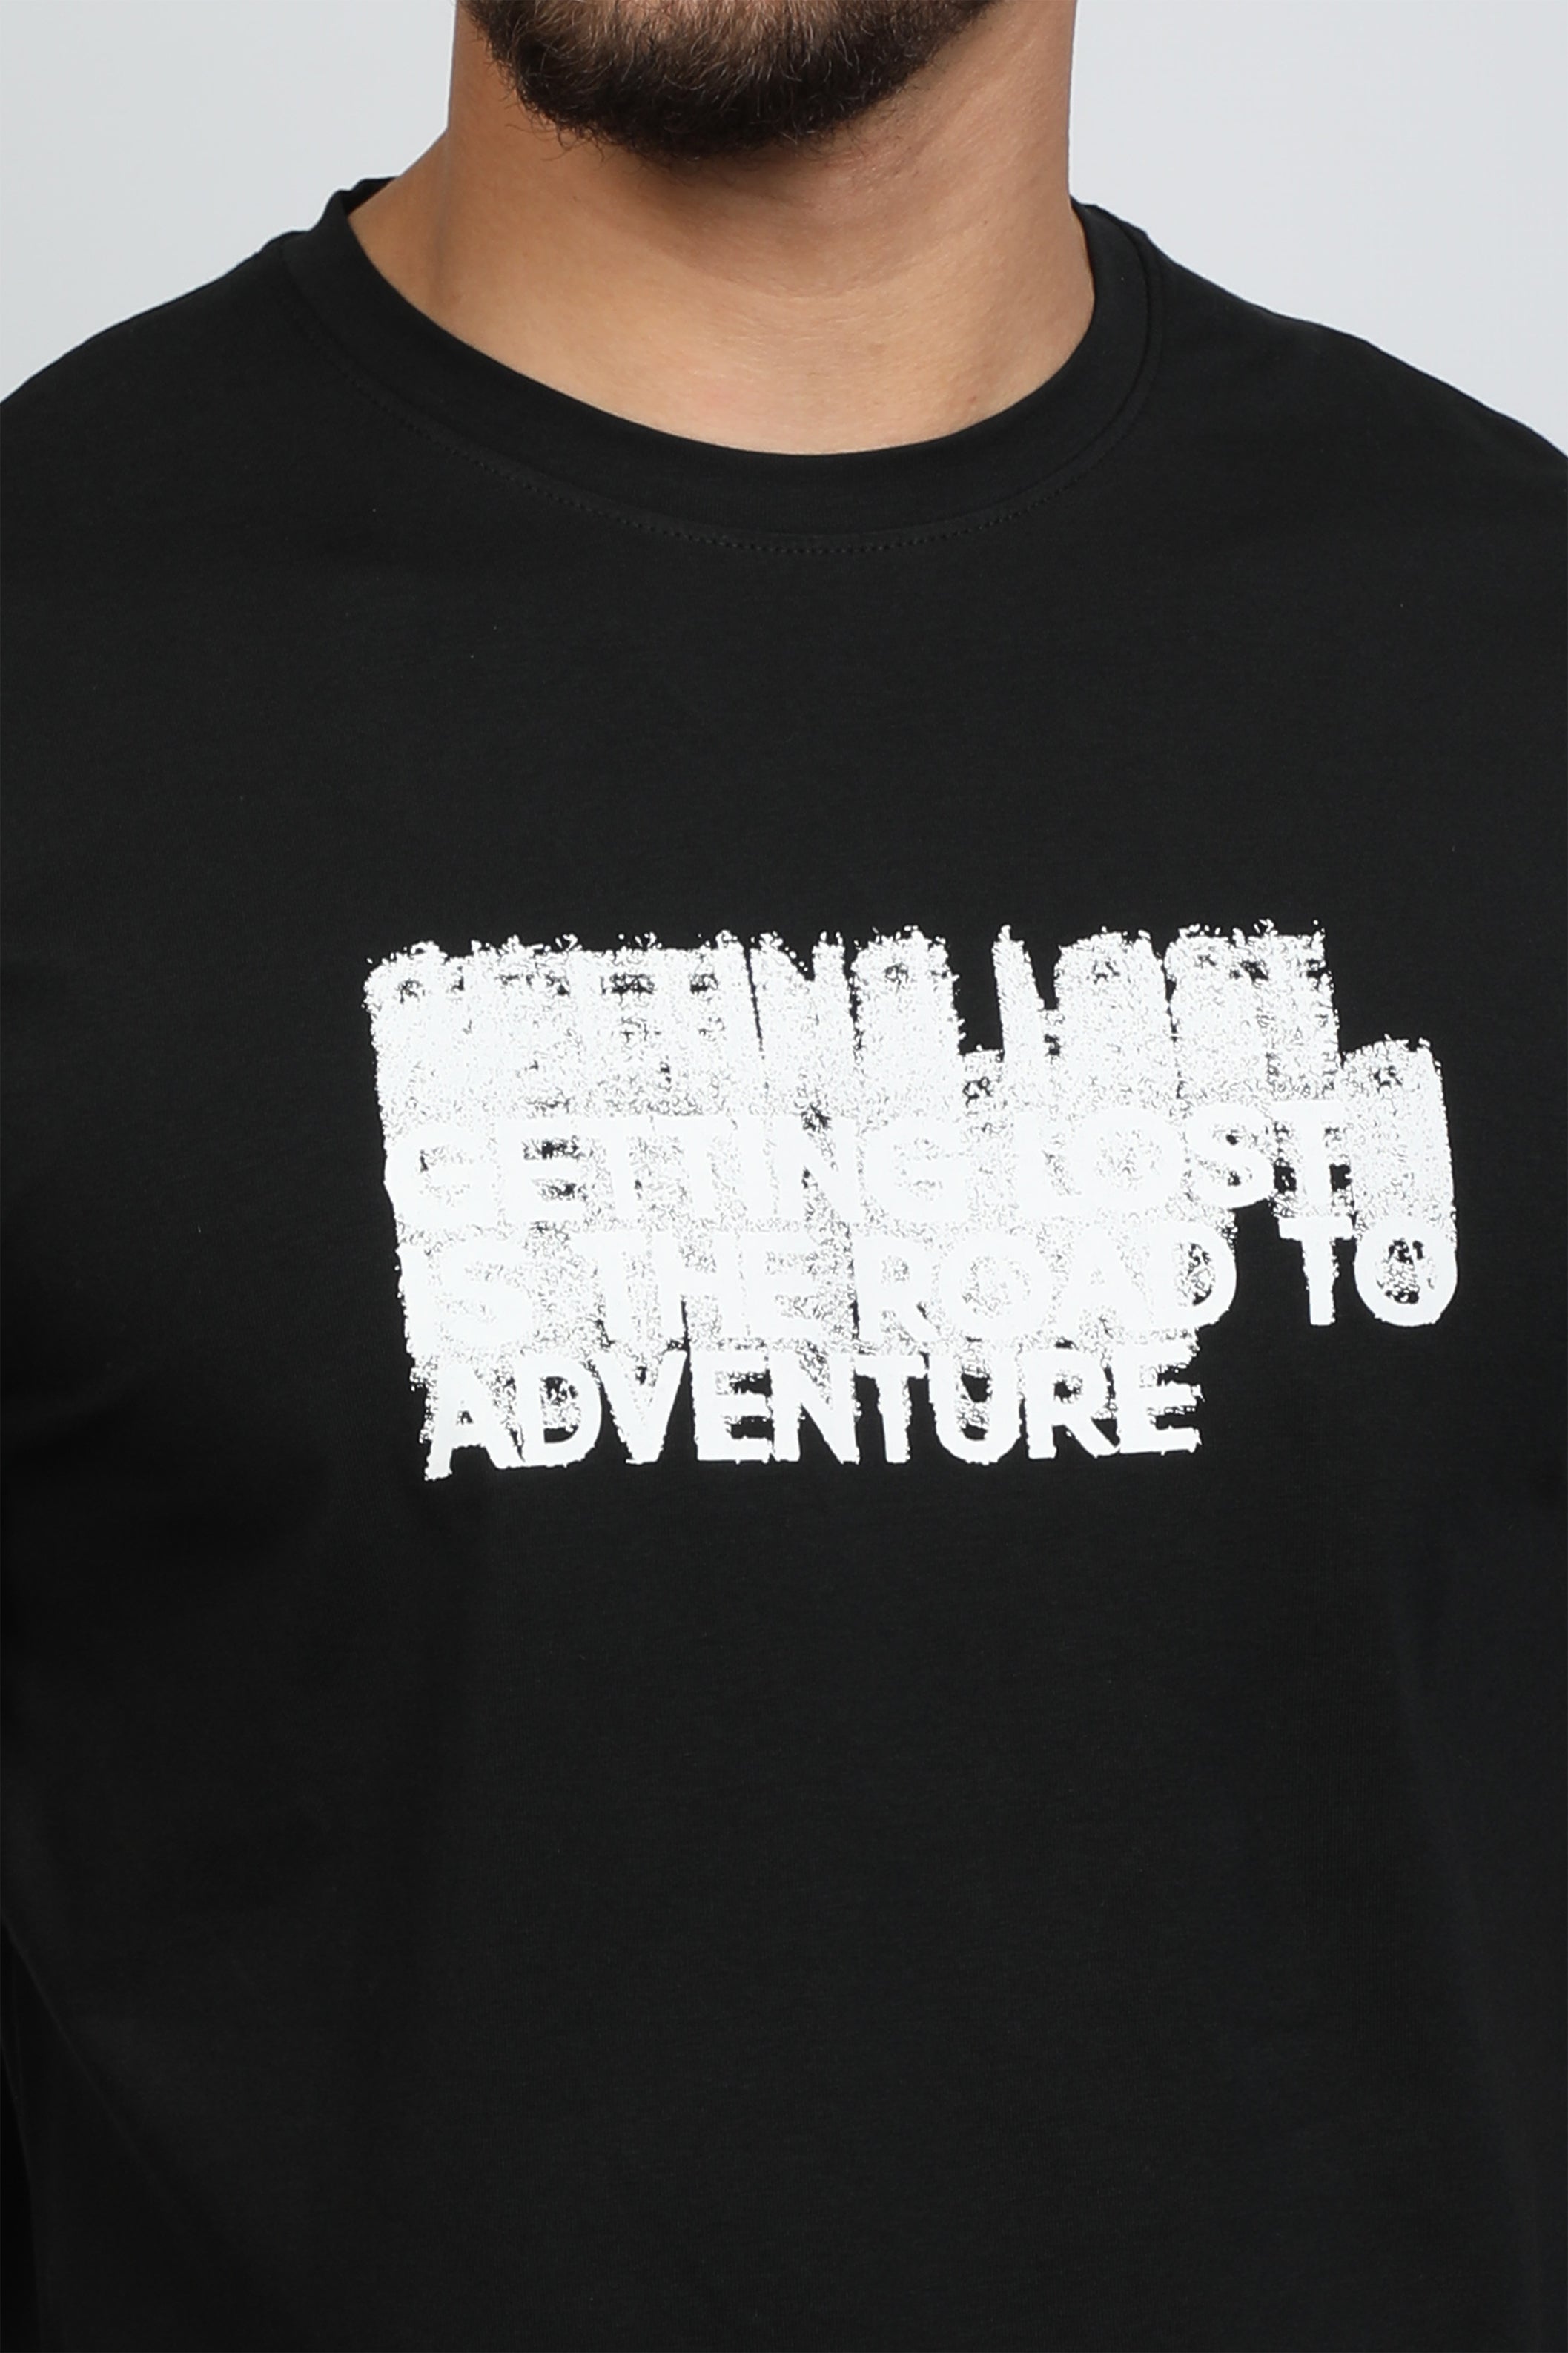 Men Black T-shirt With "Adventure" Front Design